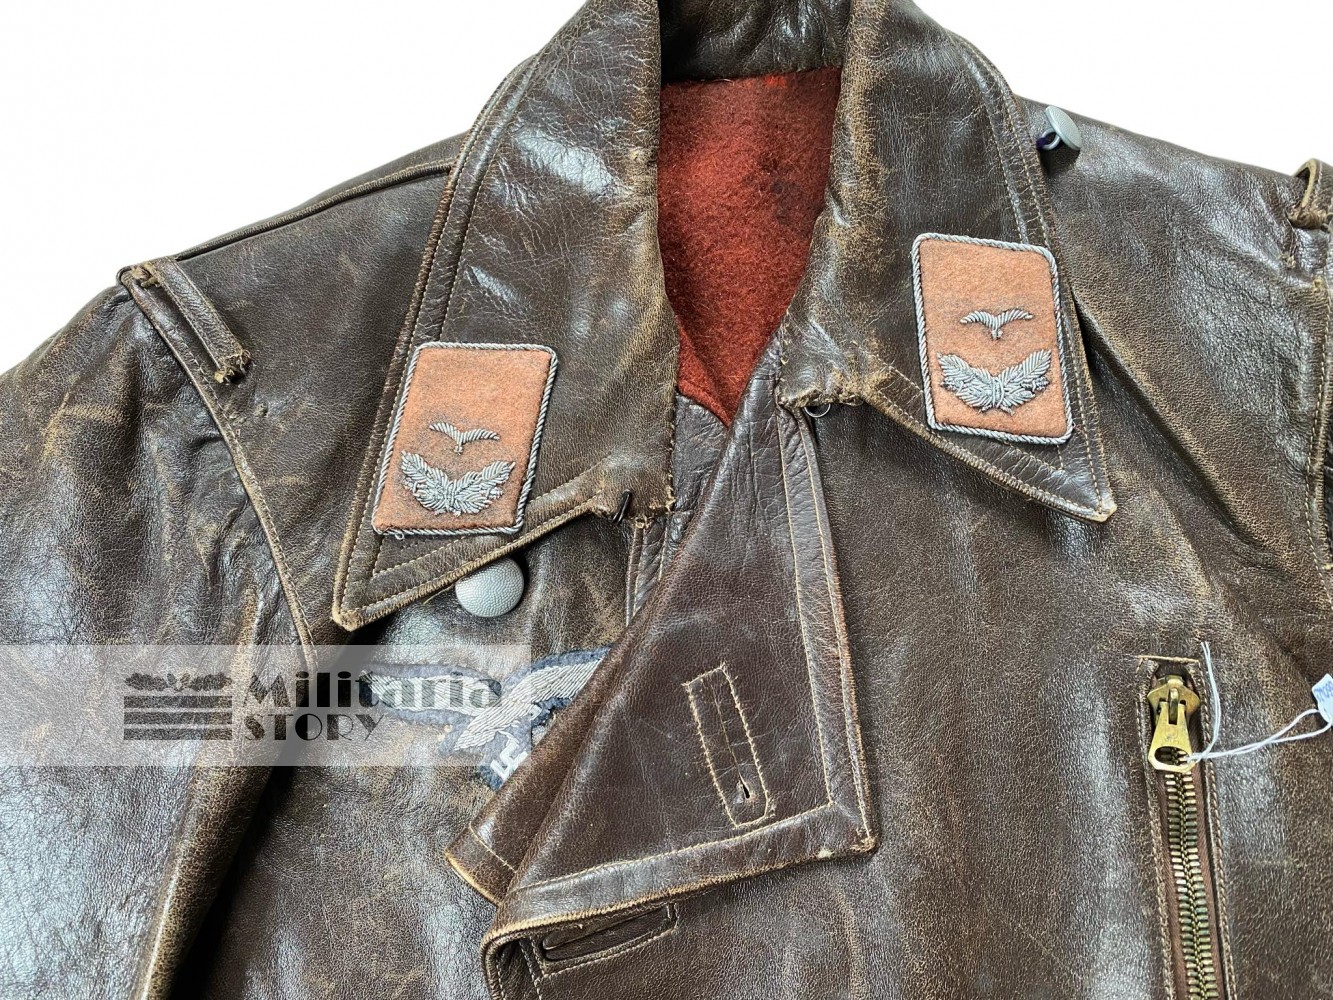 Luftwaffe Signal Leather jacket - Luftwaffe Signal Leather jacket: pre-war German Uniforms